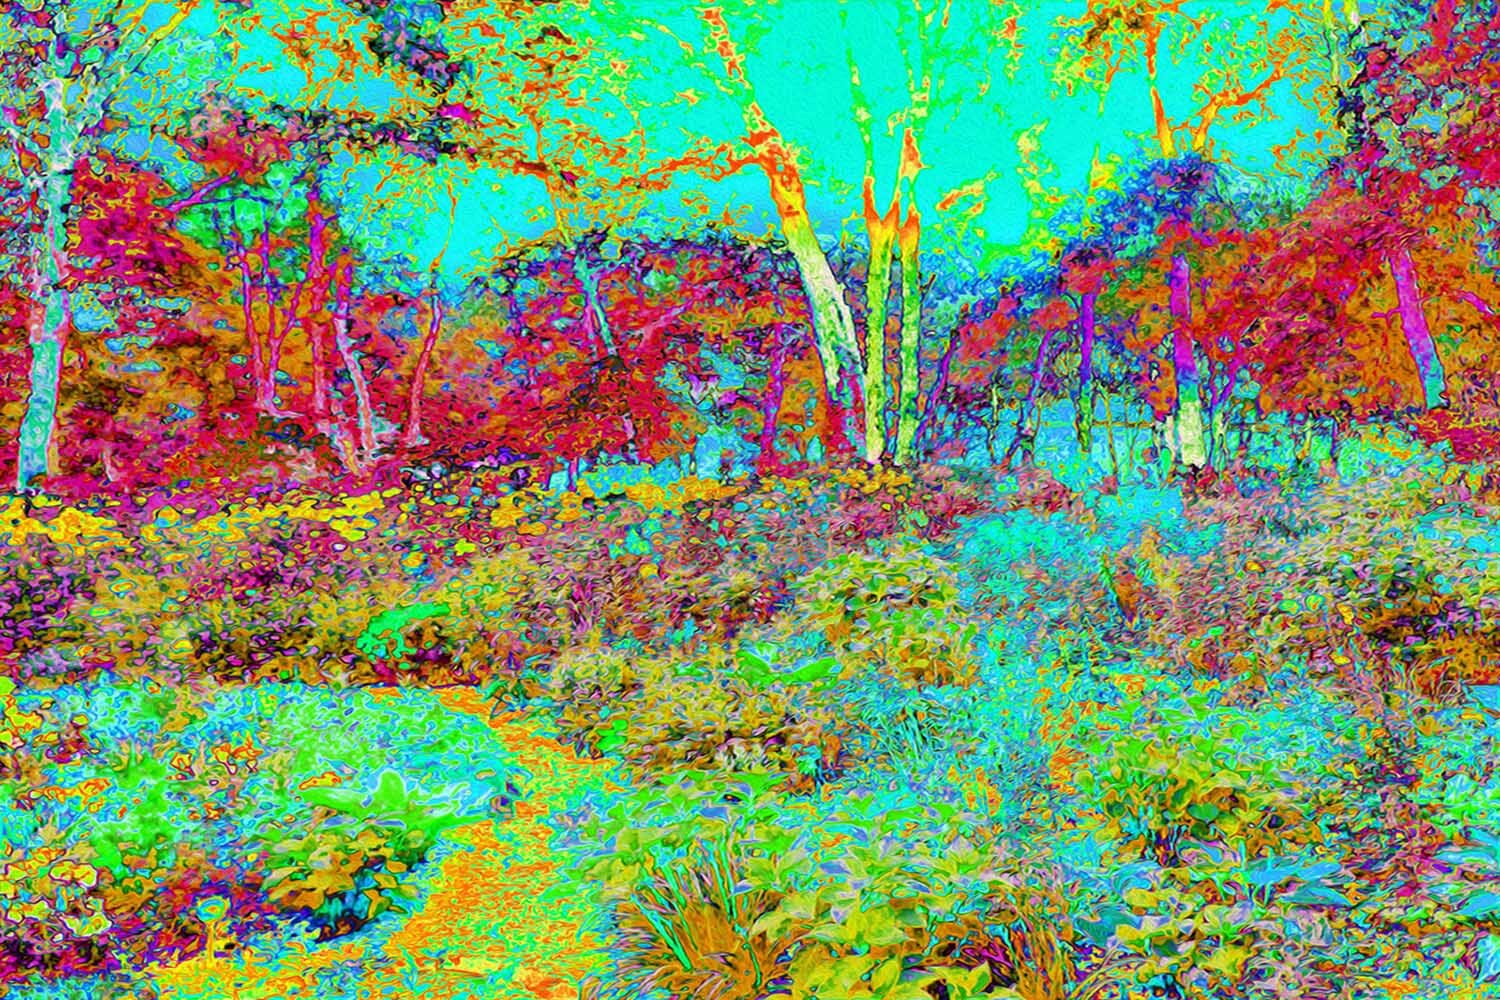 Psychedelic Autumn Gold and Aqua Garden Landscape